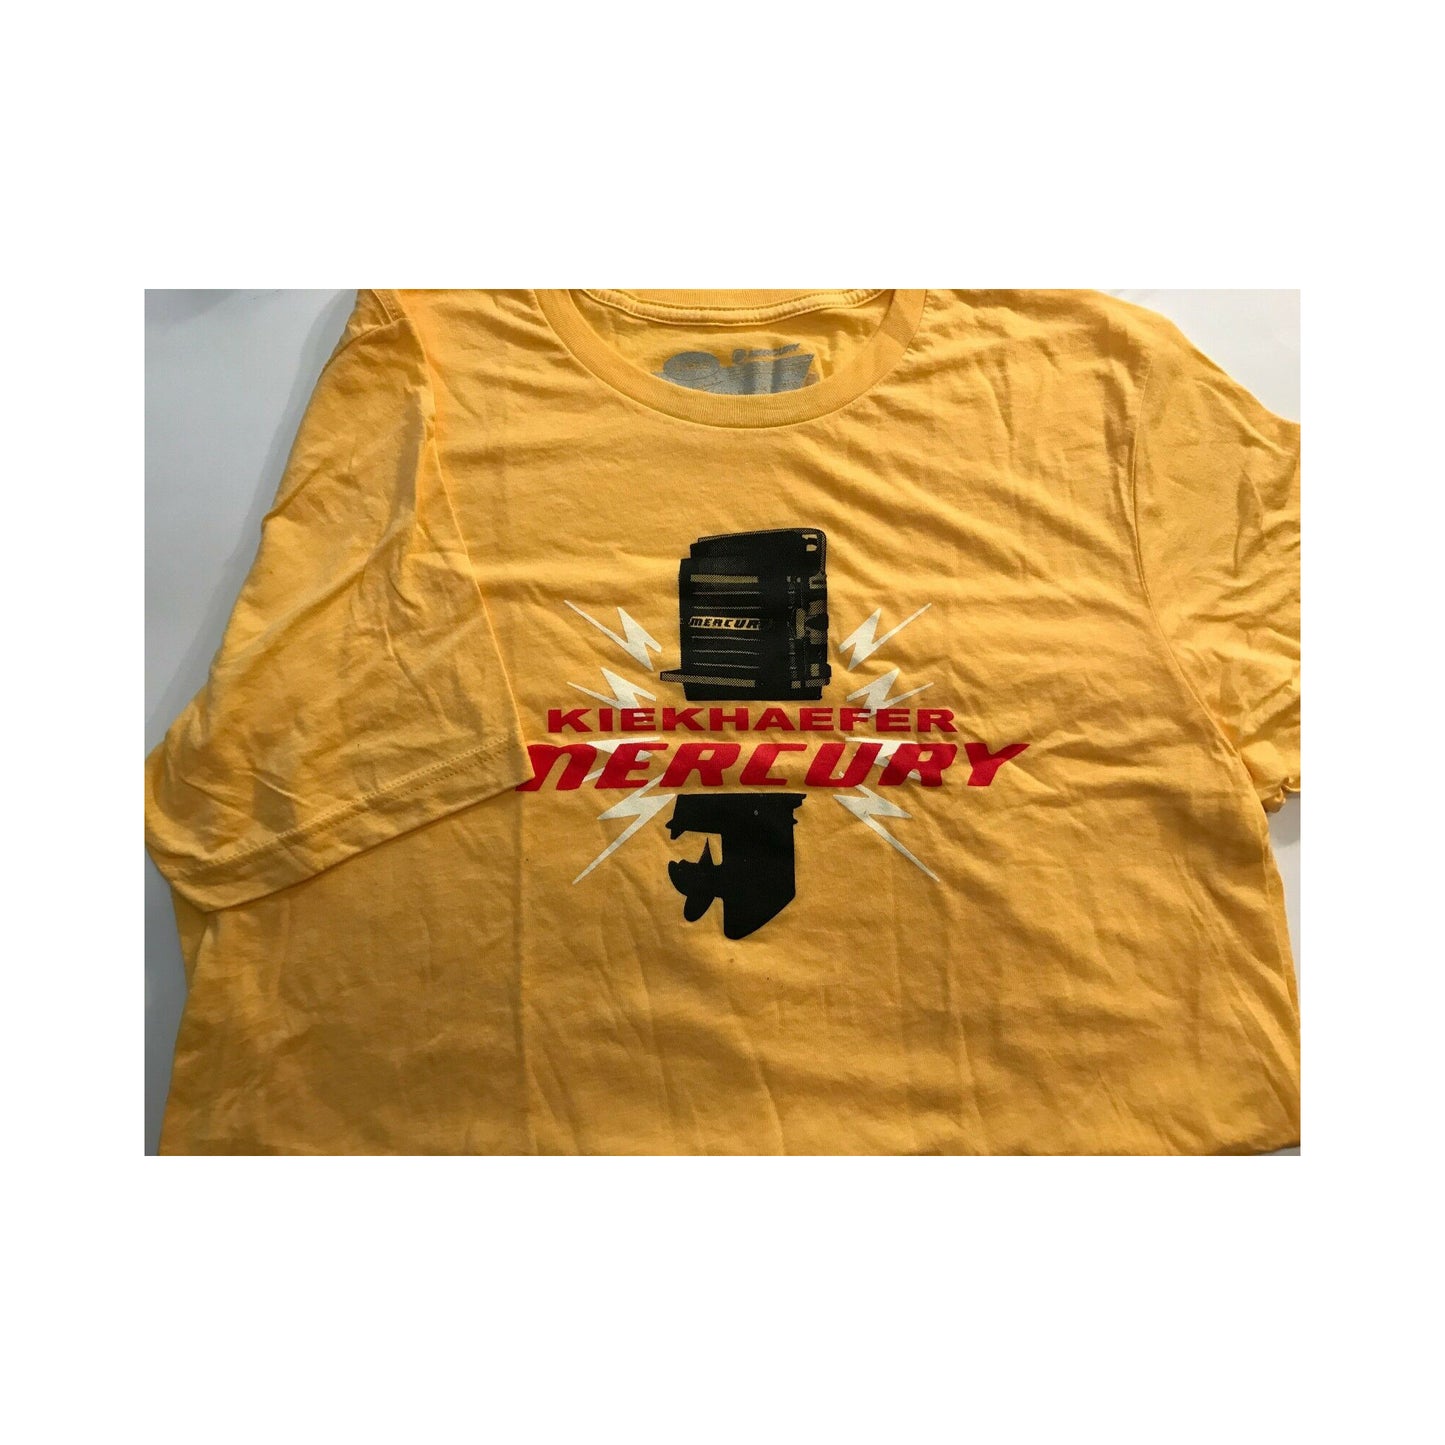 New Authentic Mercury SS Shirt Large - Phantom Yellow Kiekhaefer Motor